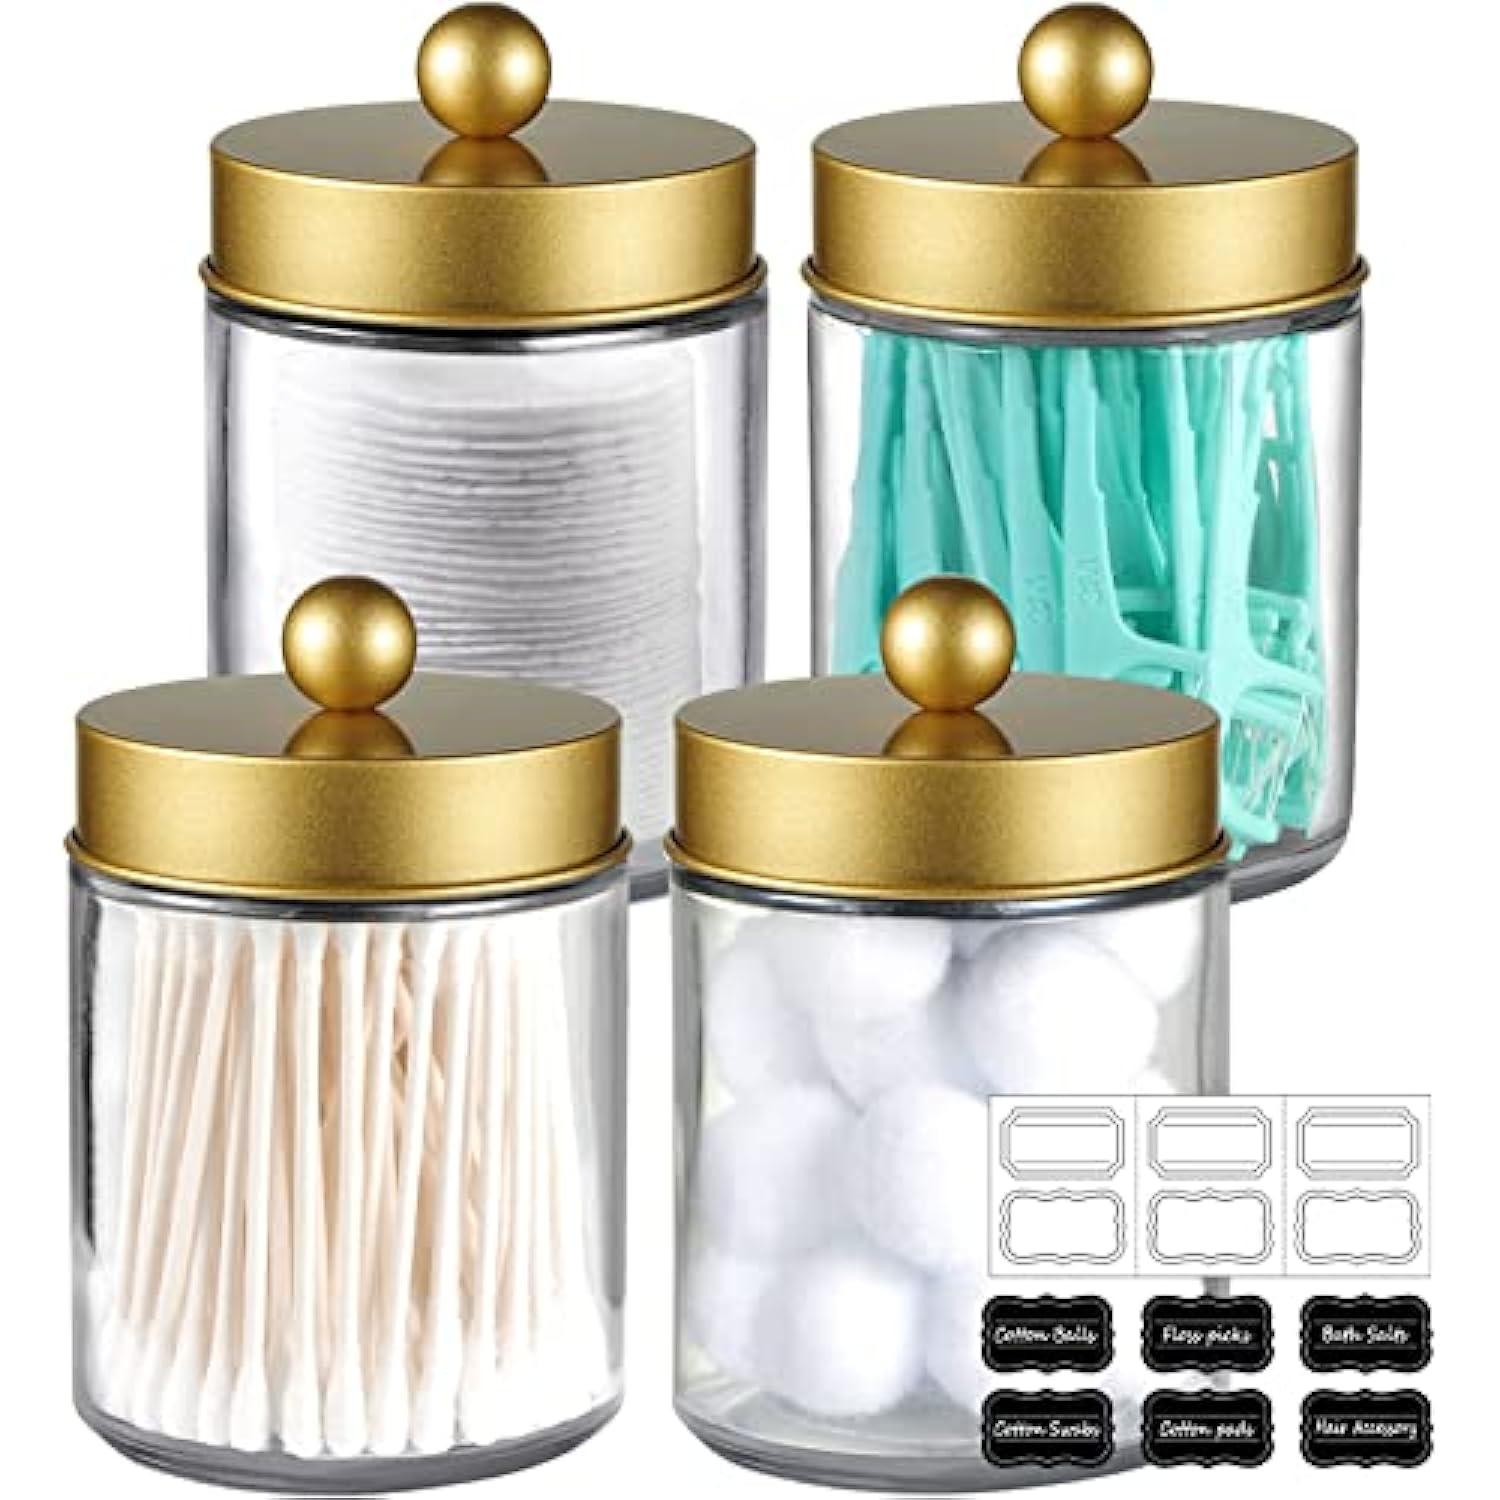 mason jar bathroom apothecary jars - rustproof stainless steel  lid,farmhouse decor,bathroom vanity storage organizer holder glass for  cotton